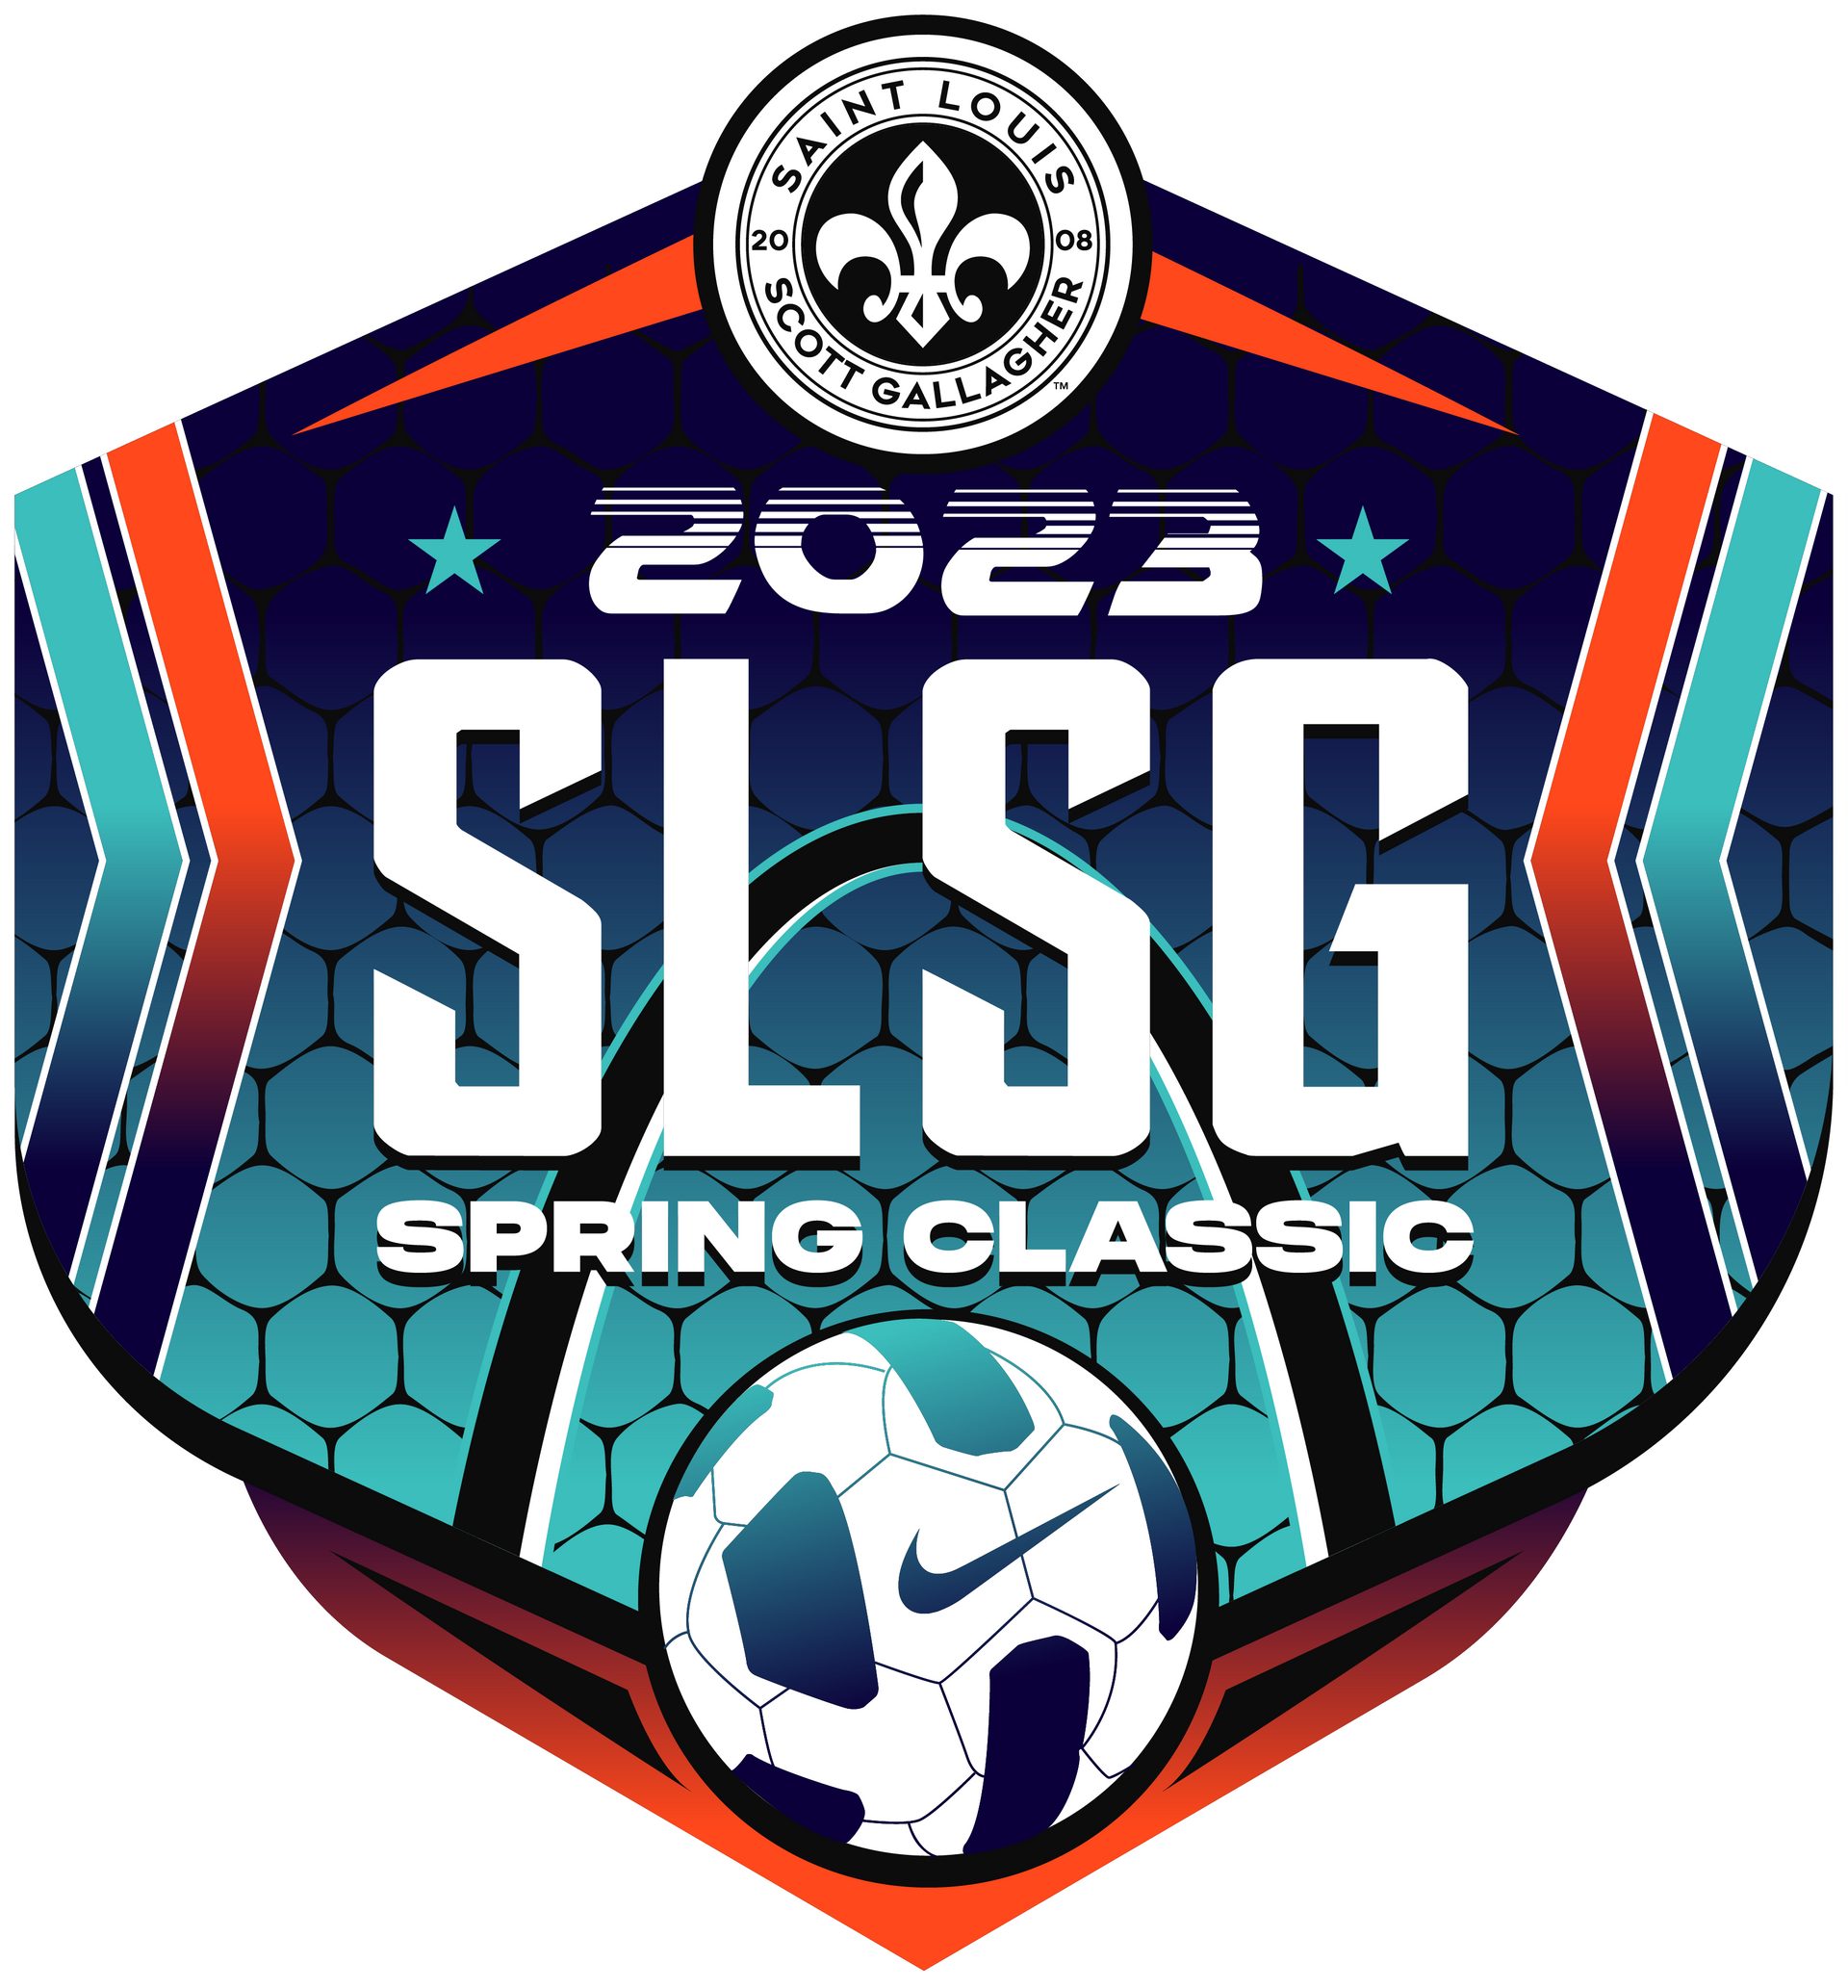 St. Louis Scott Gallagher — Club Soccer in Saint Louis